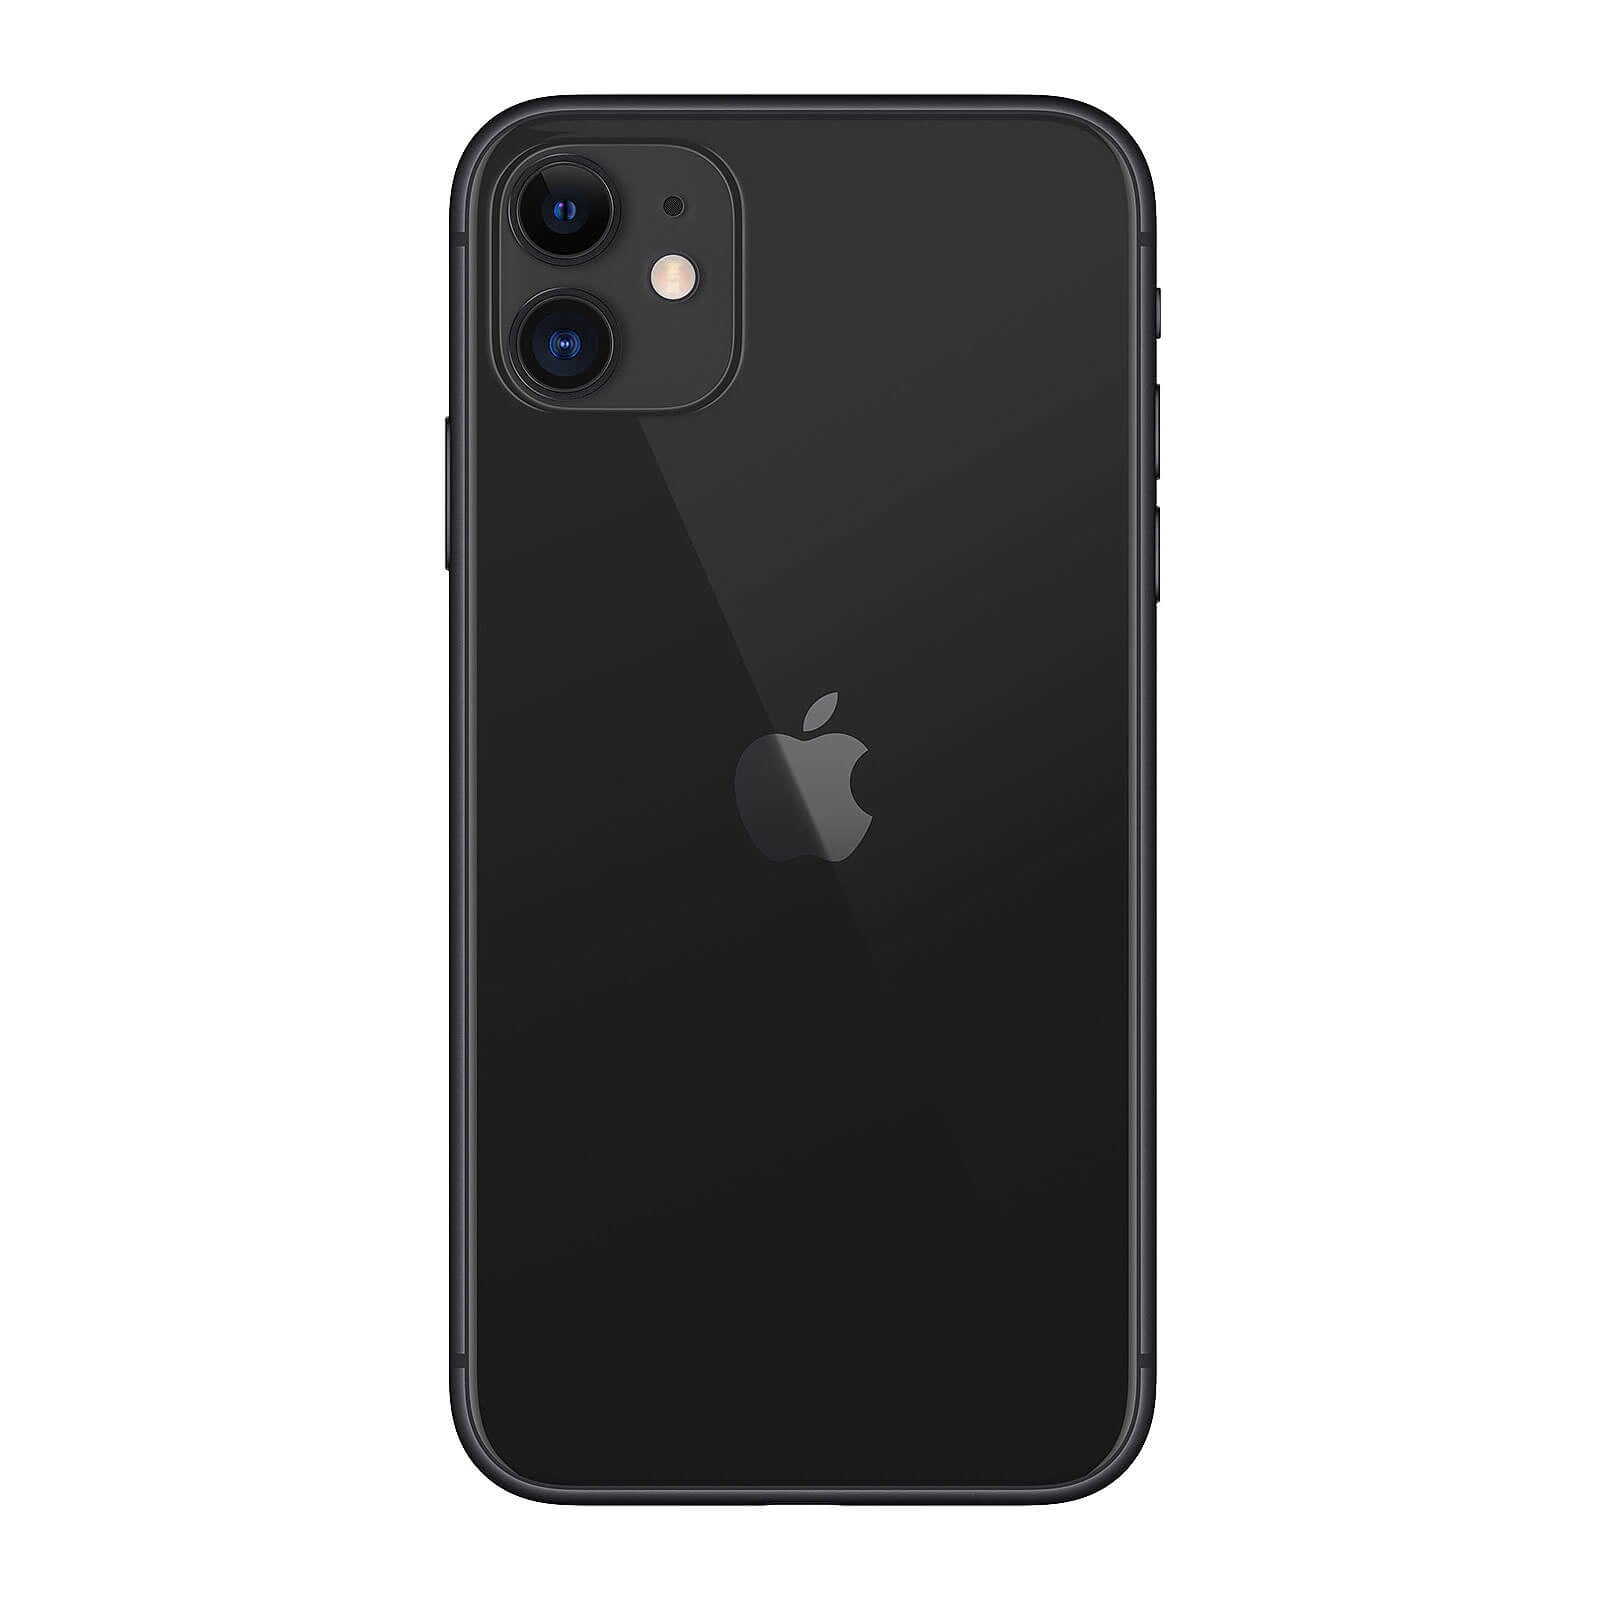 Apple iPhone 11 64GB Black Pristine - Unlocked